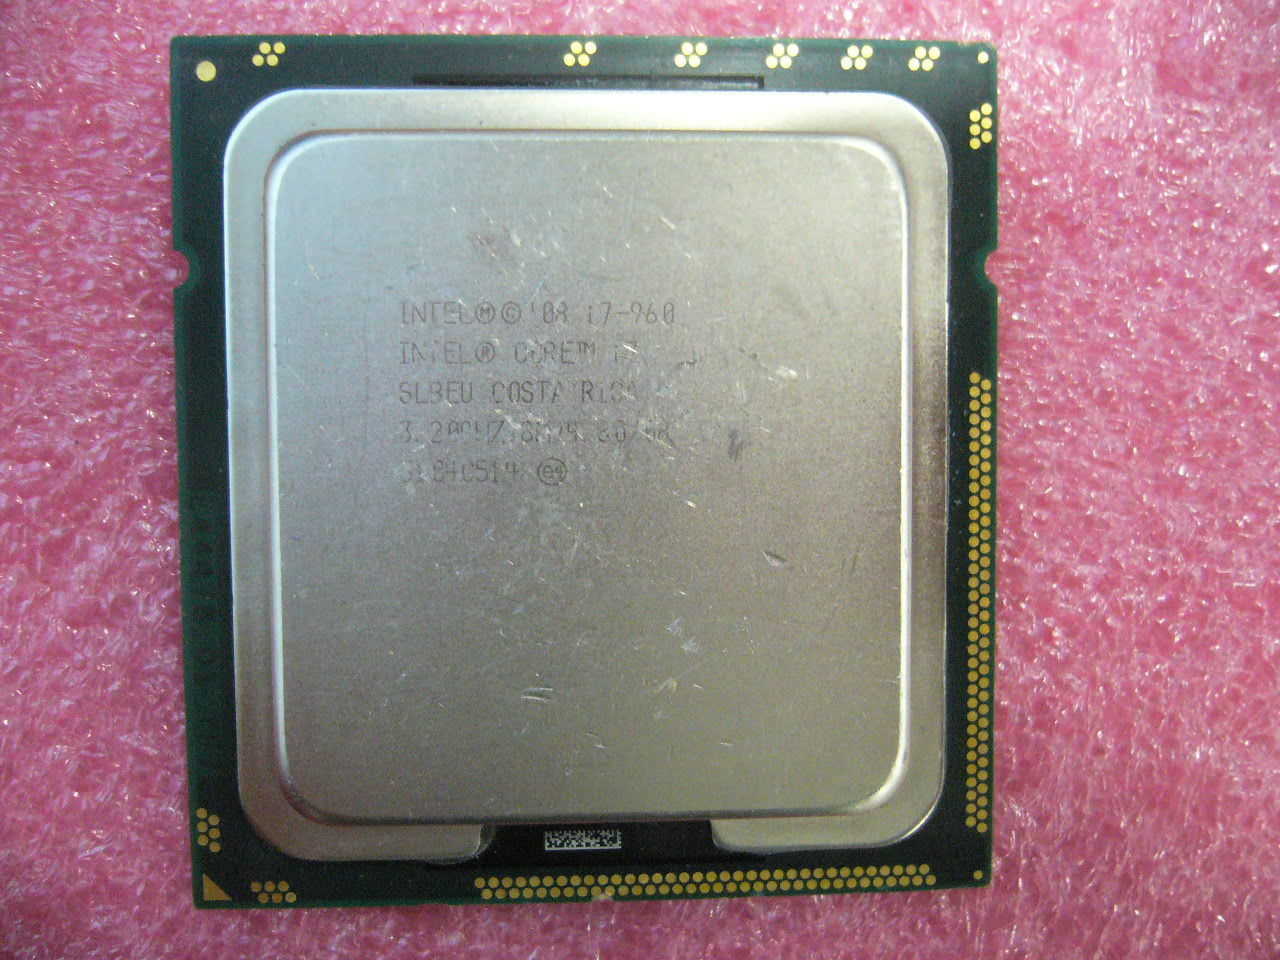 QTY 1x INTEL Quad-Cores CPU i7-960 3.20GHZ/8MB/4.80 LGA1366 SLBEU